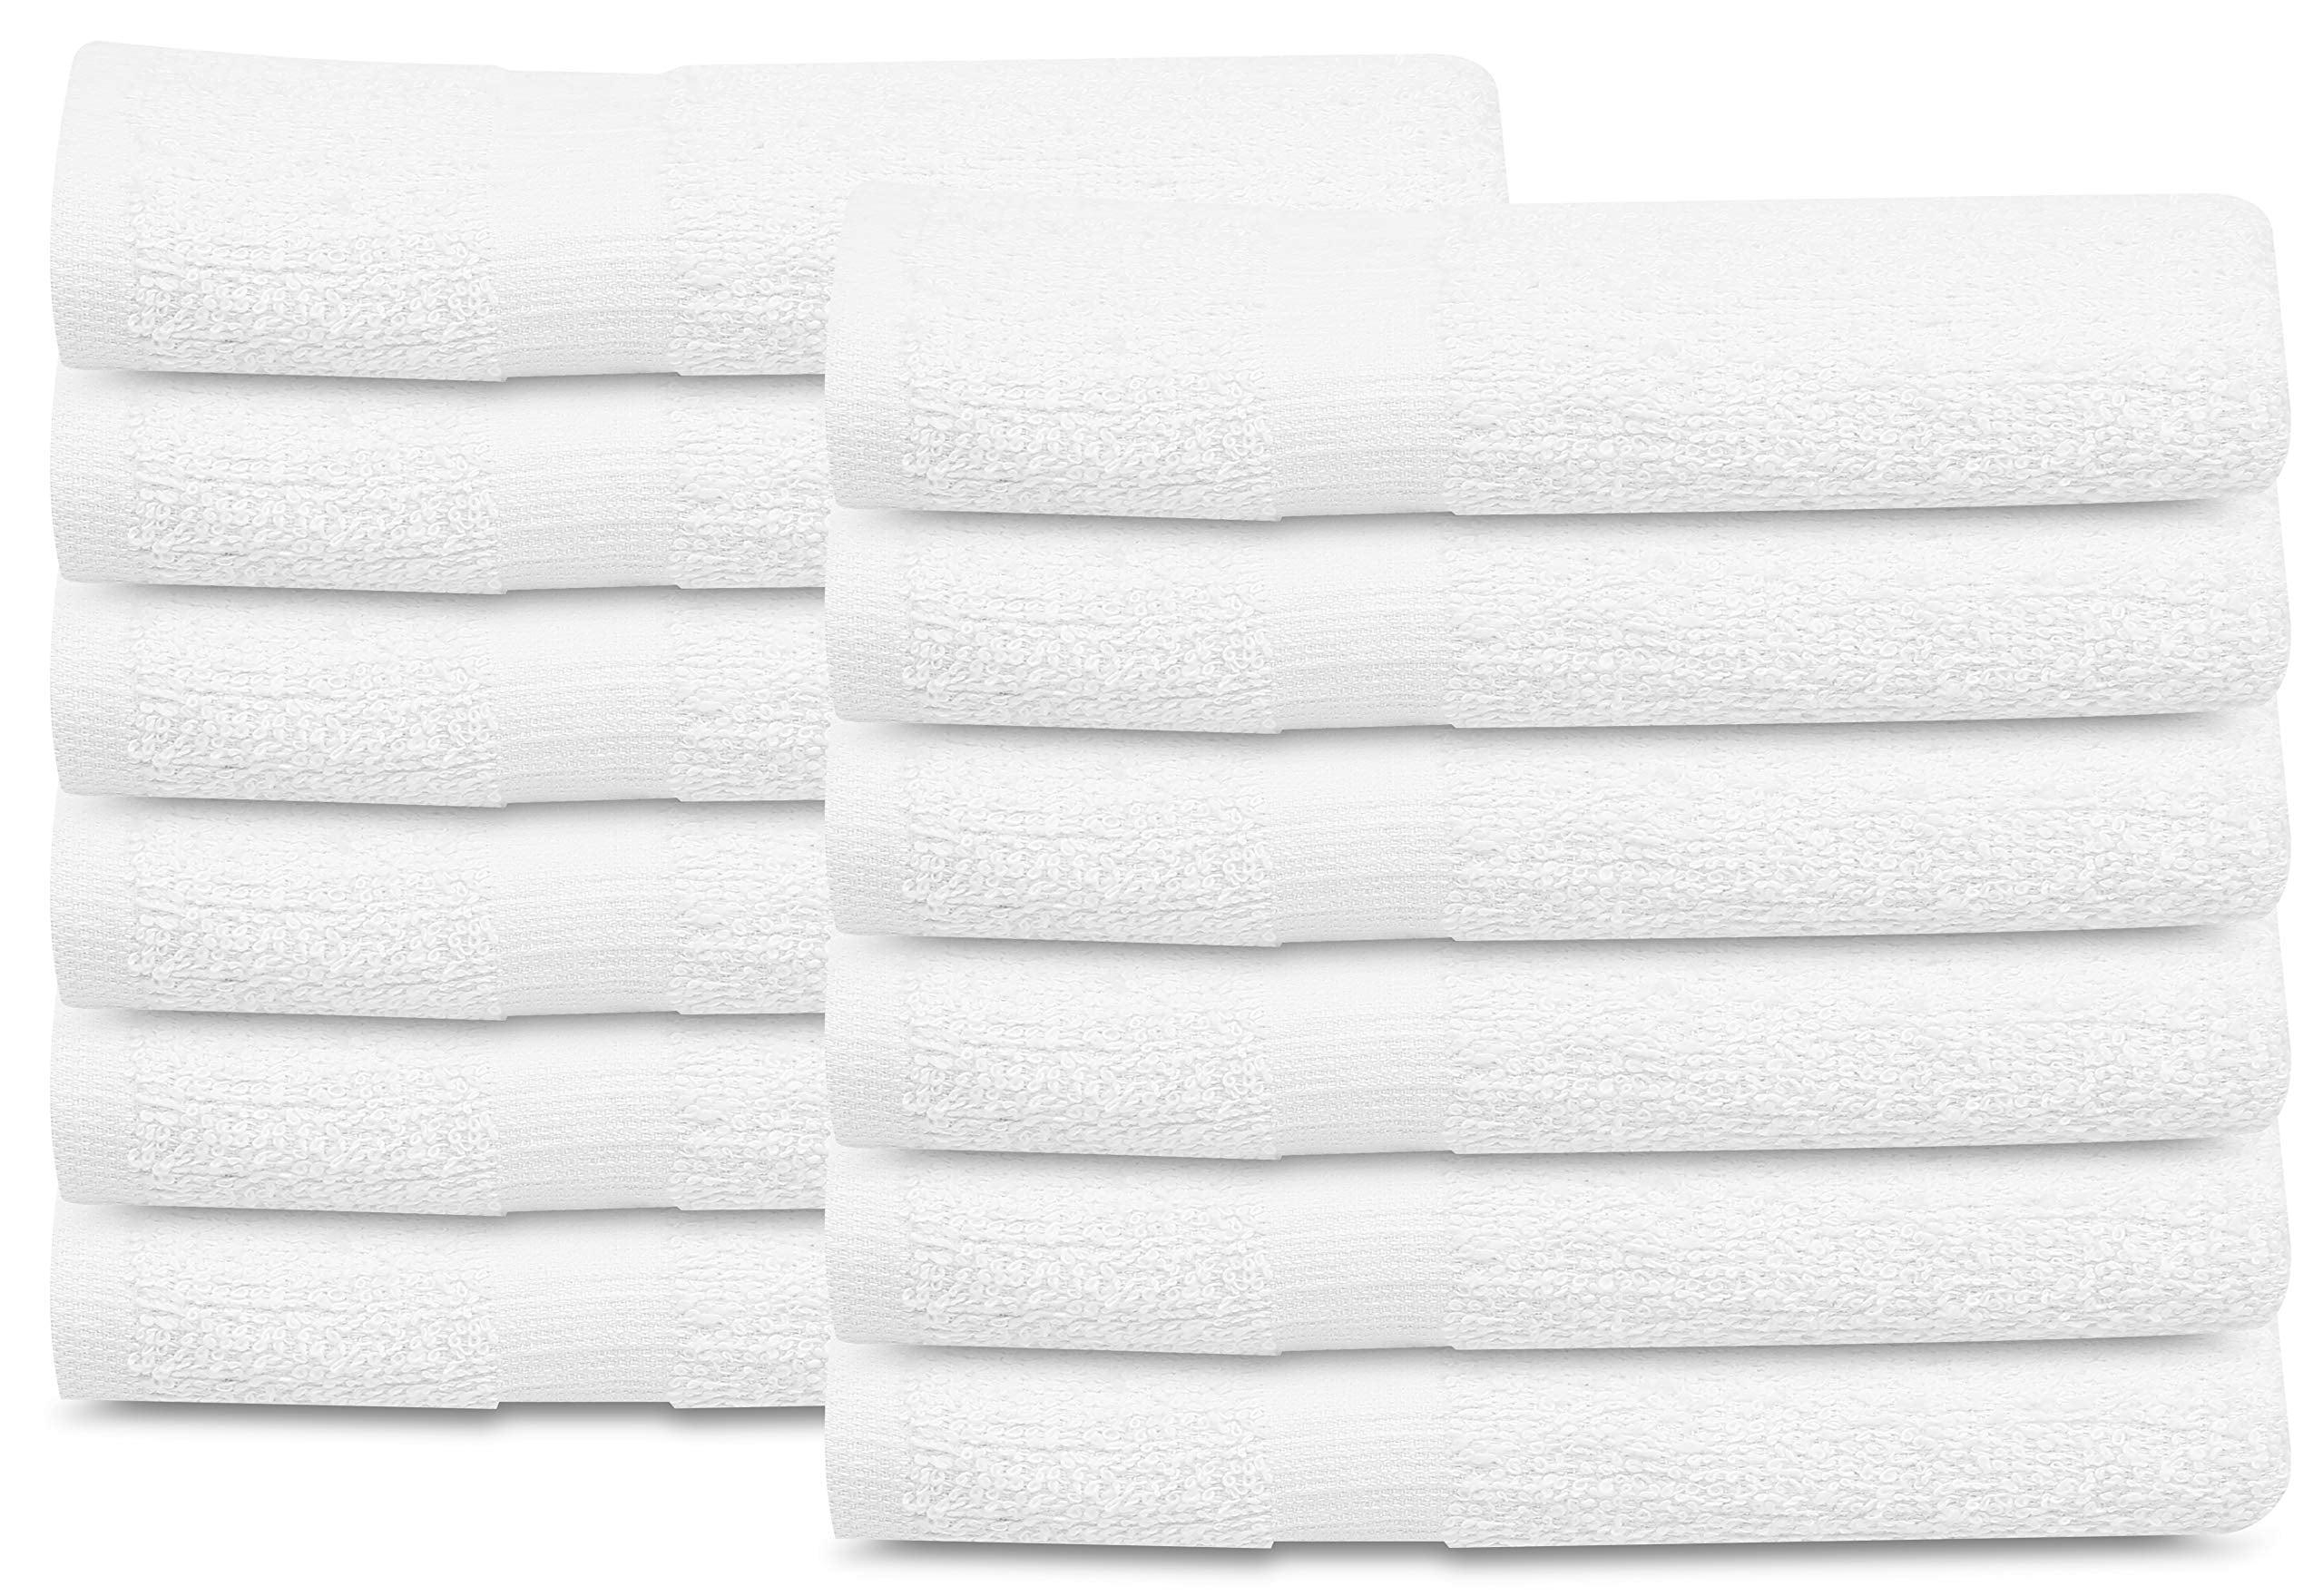 1 new white cotton hotel bath mat 6.5#dz 20x30 economy grade basics collection 